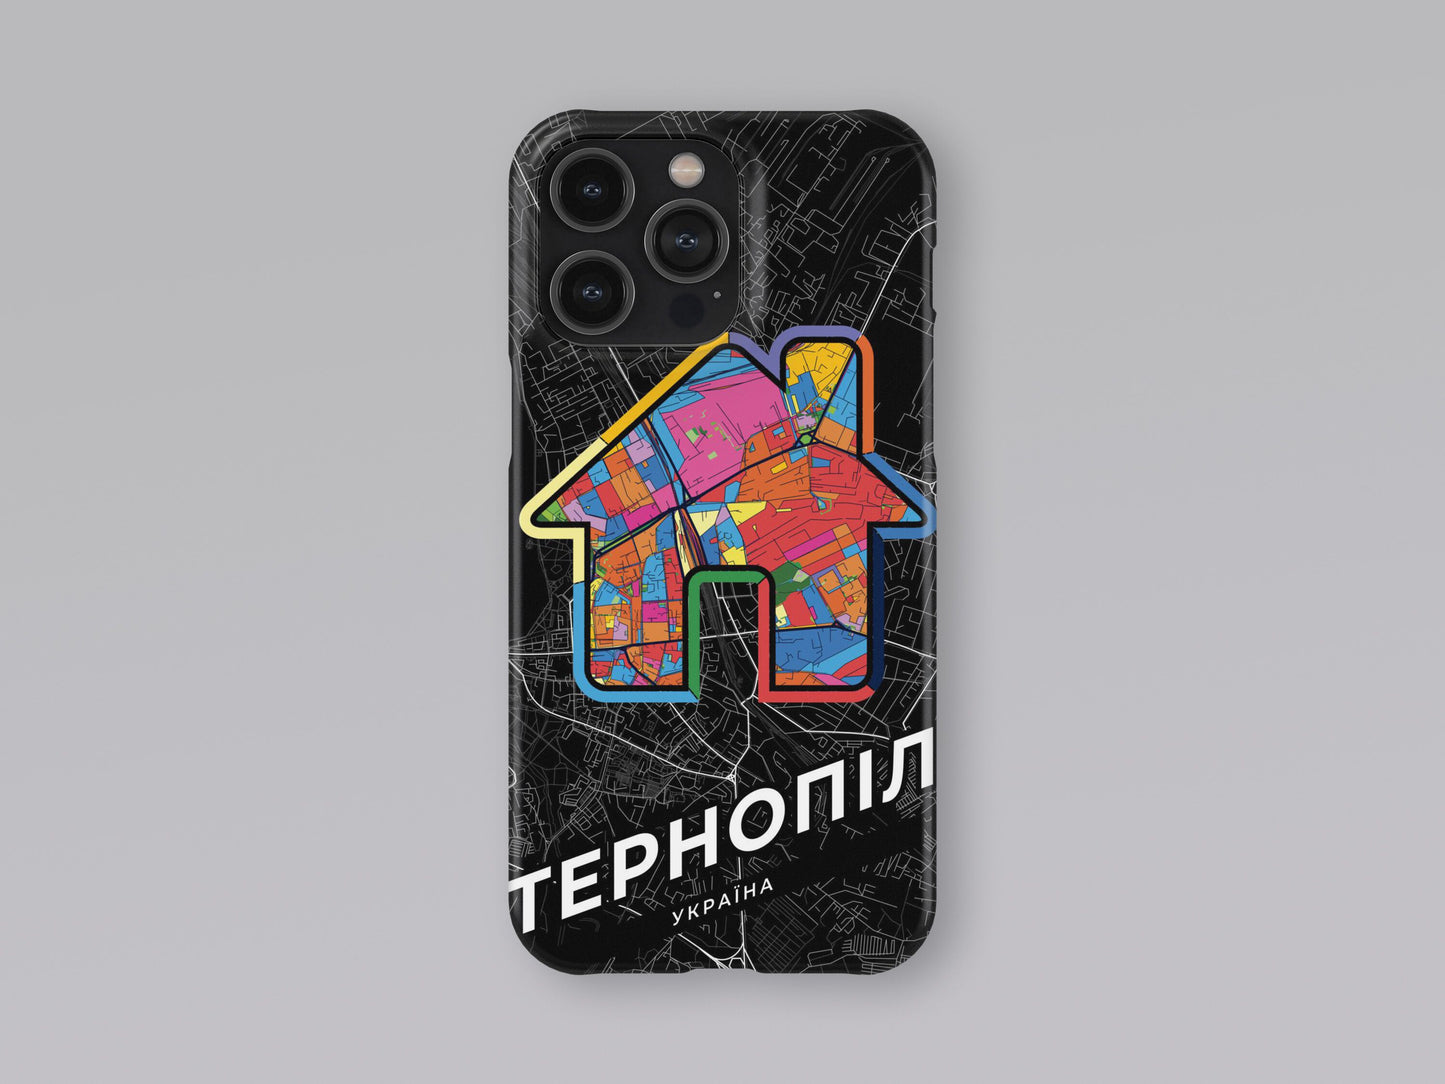 Ternopil Ukraine slim phone case with colorful icon 3